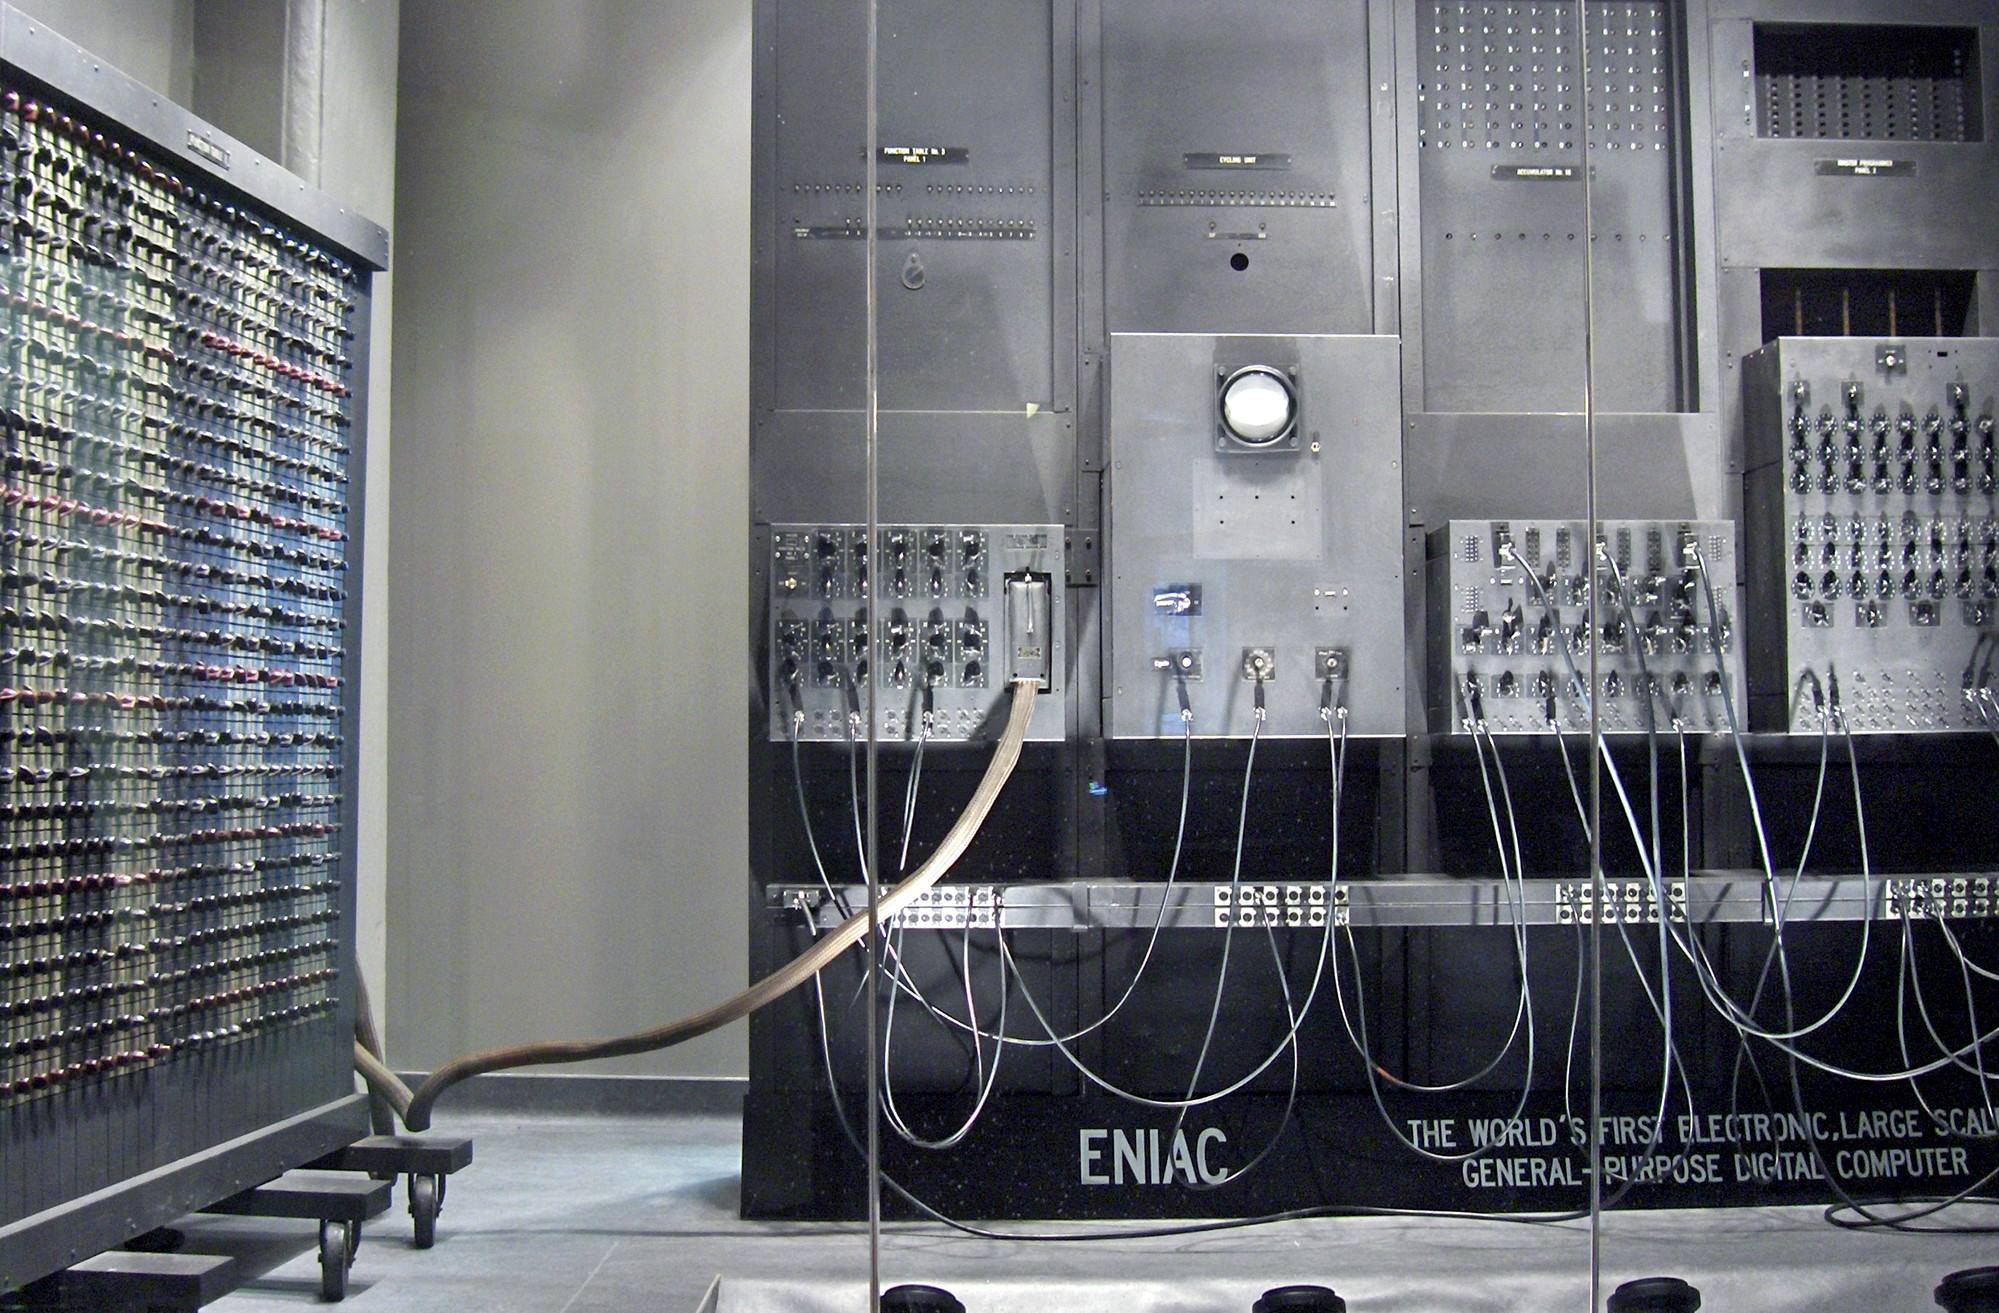 What Is ENIAC?